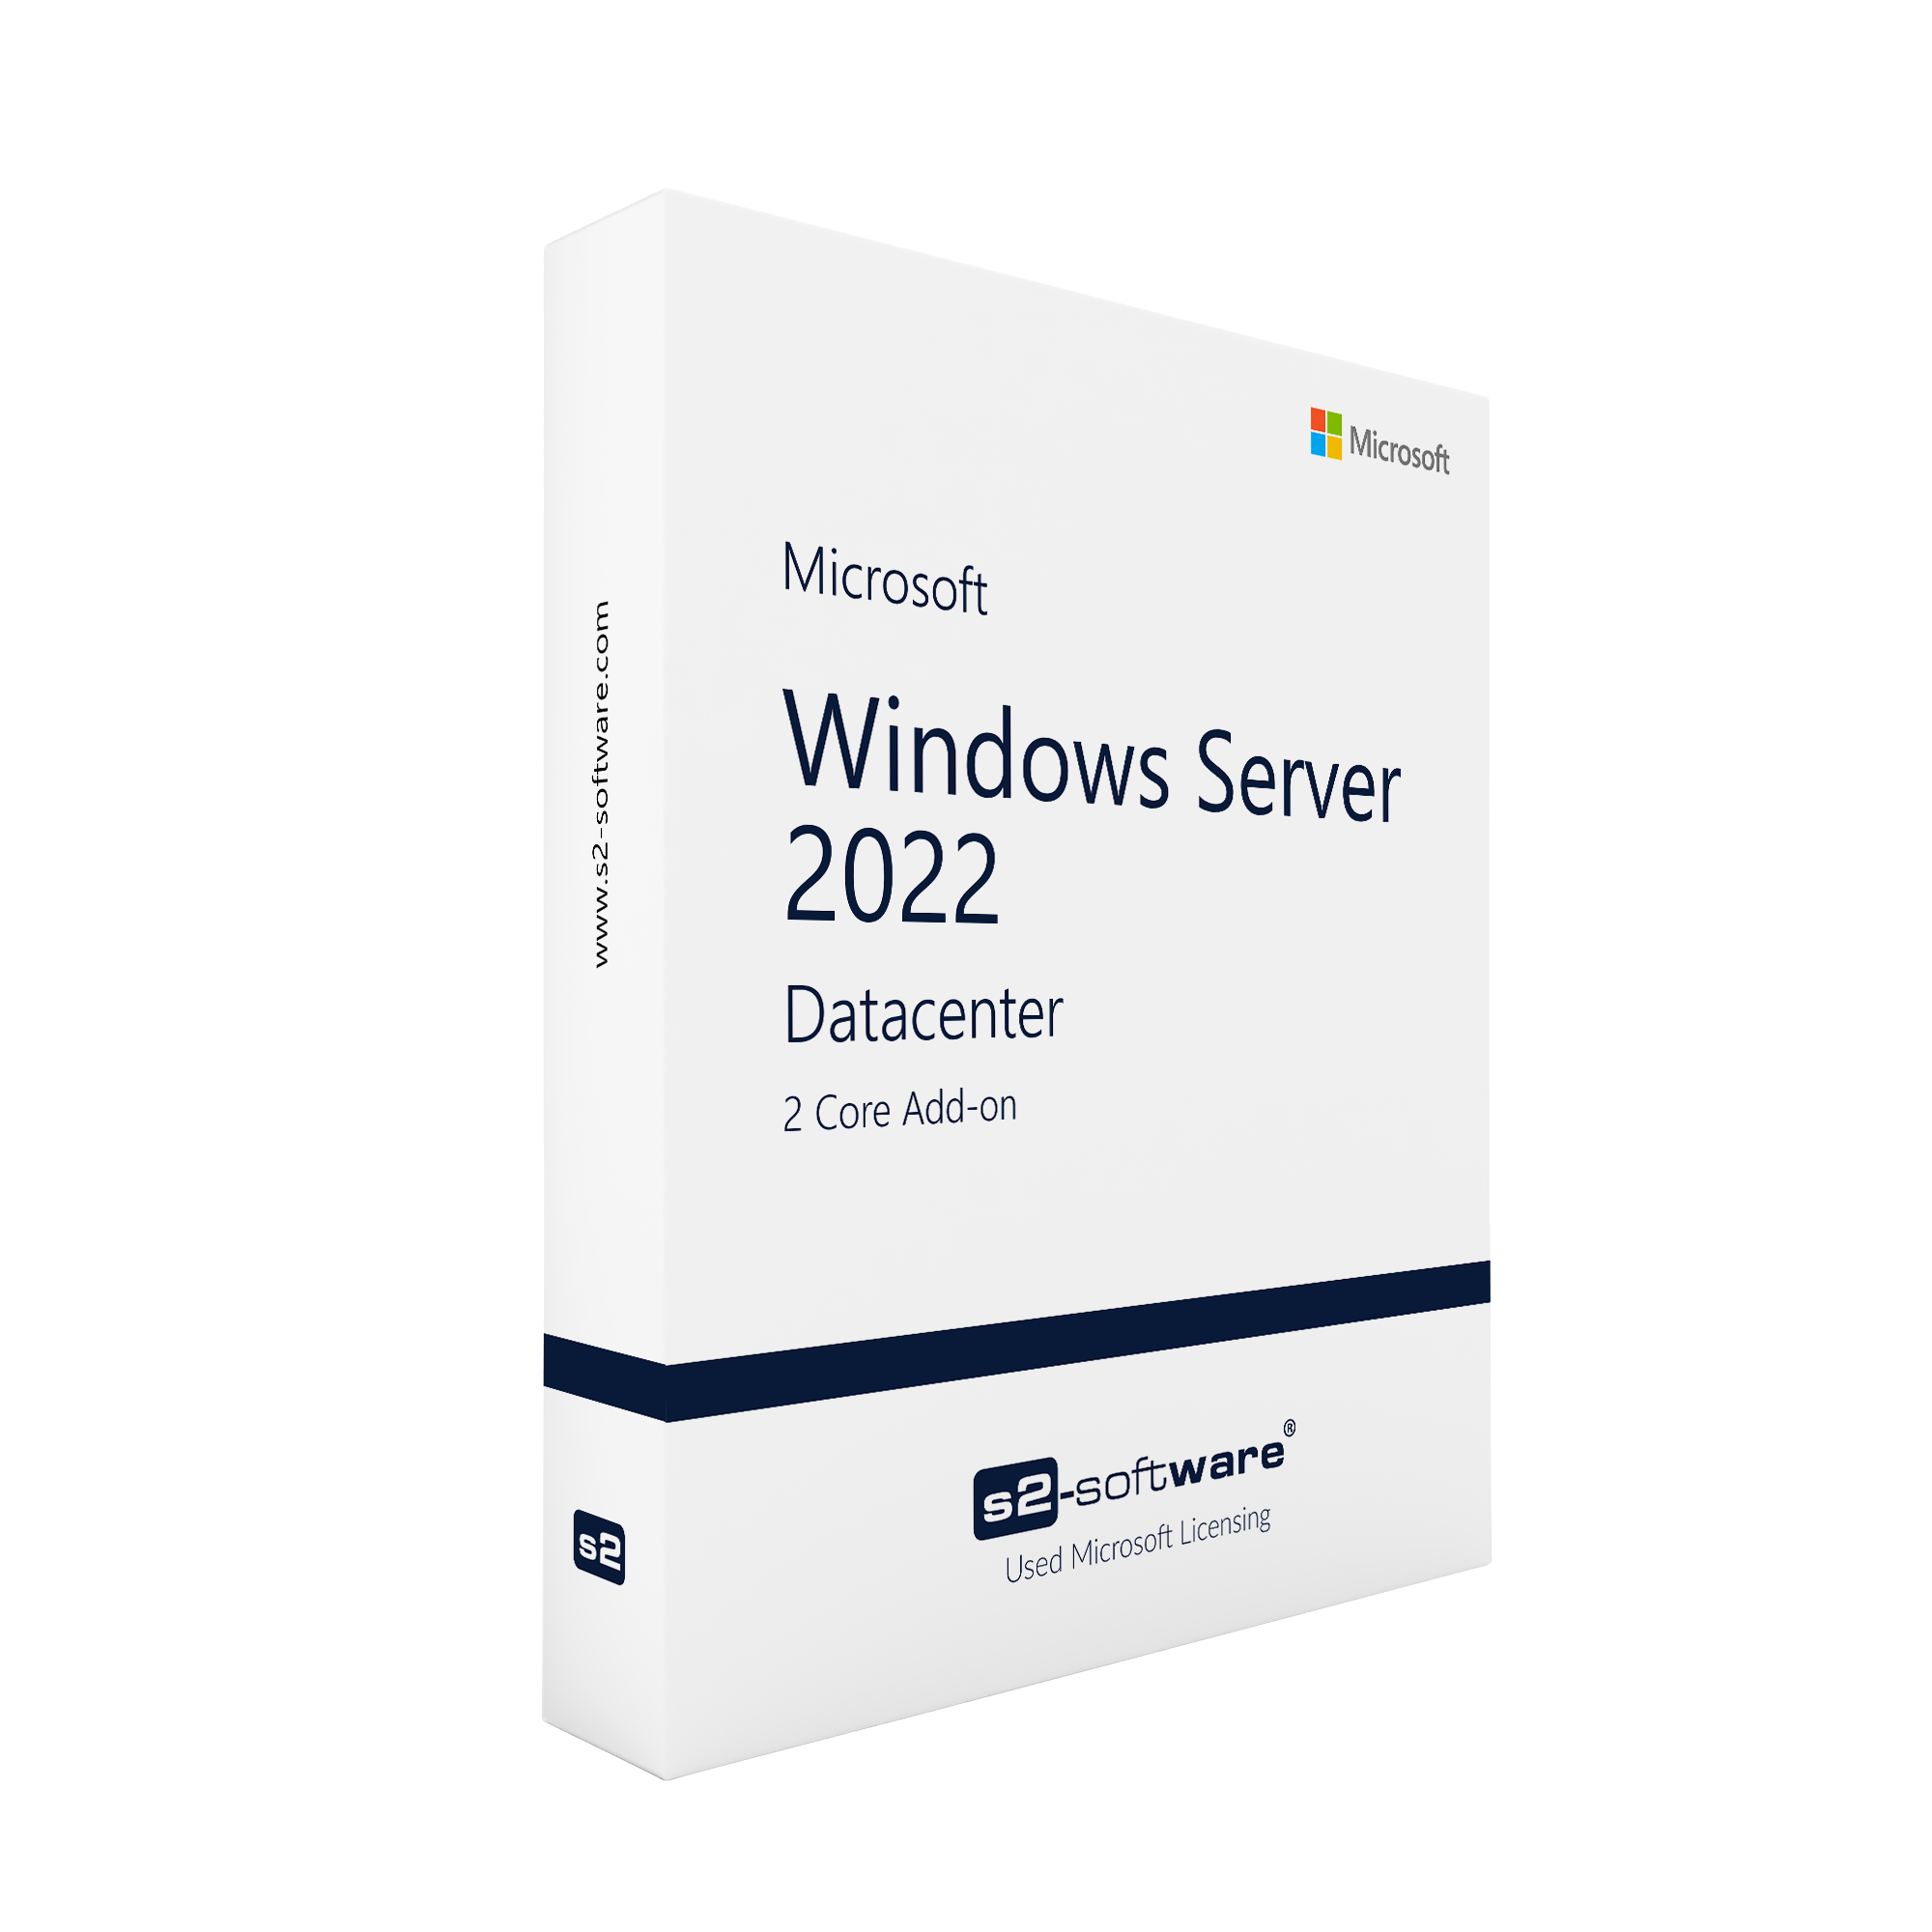 Windows Server 2022 Datacenter 2 Core Add-on